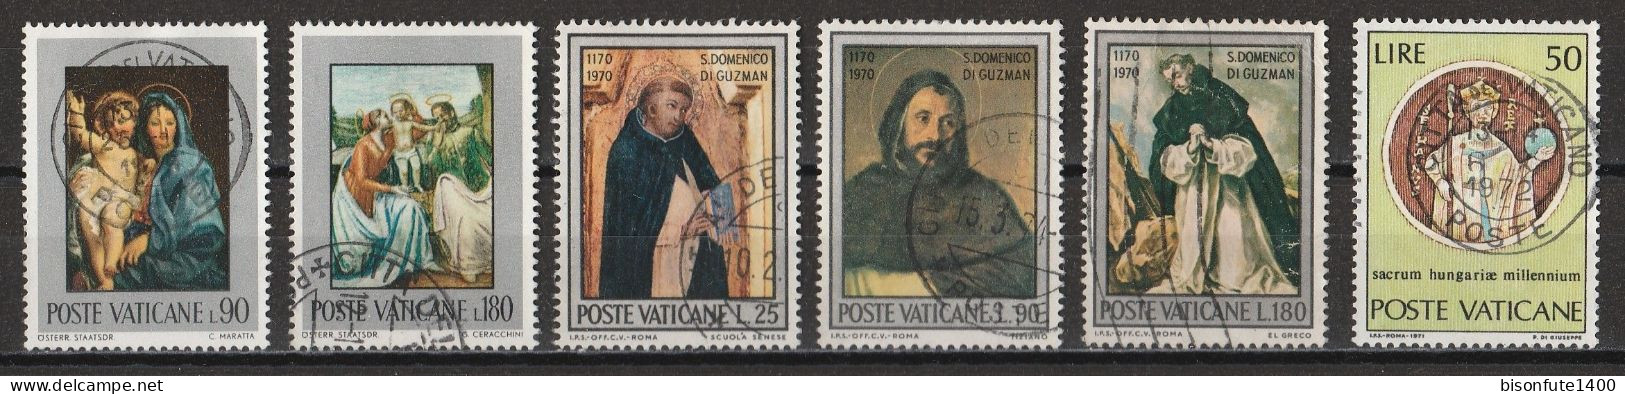 Vatican 1971 : Timbres Yvert & Tellier N° 518 - 519 - 520 - 521 - 522 - 523 - 525 - 526 - 527 - 529 - 530 - 531 Et... - Usados